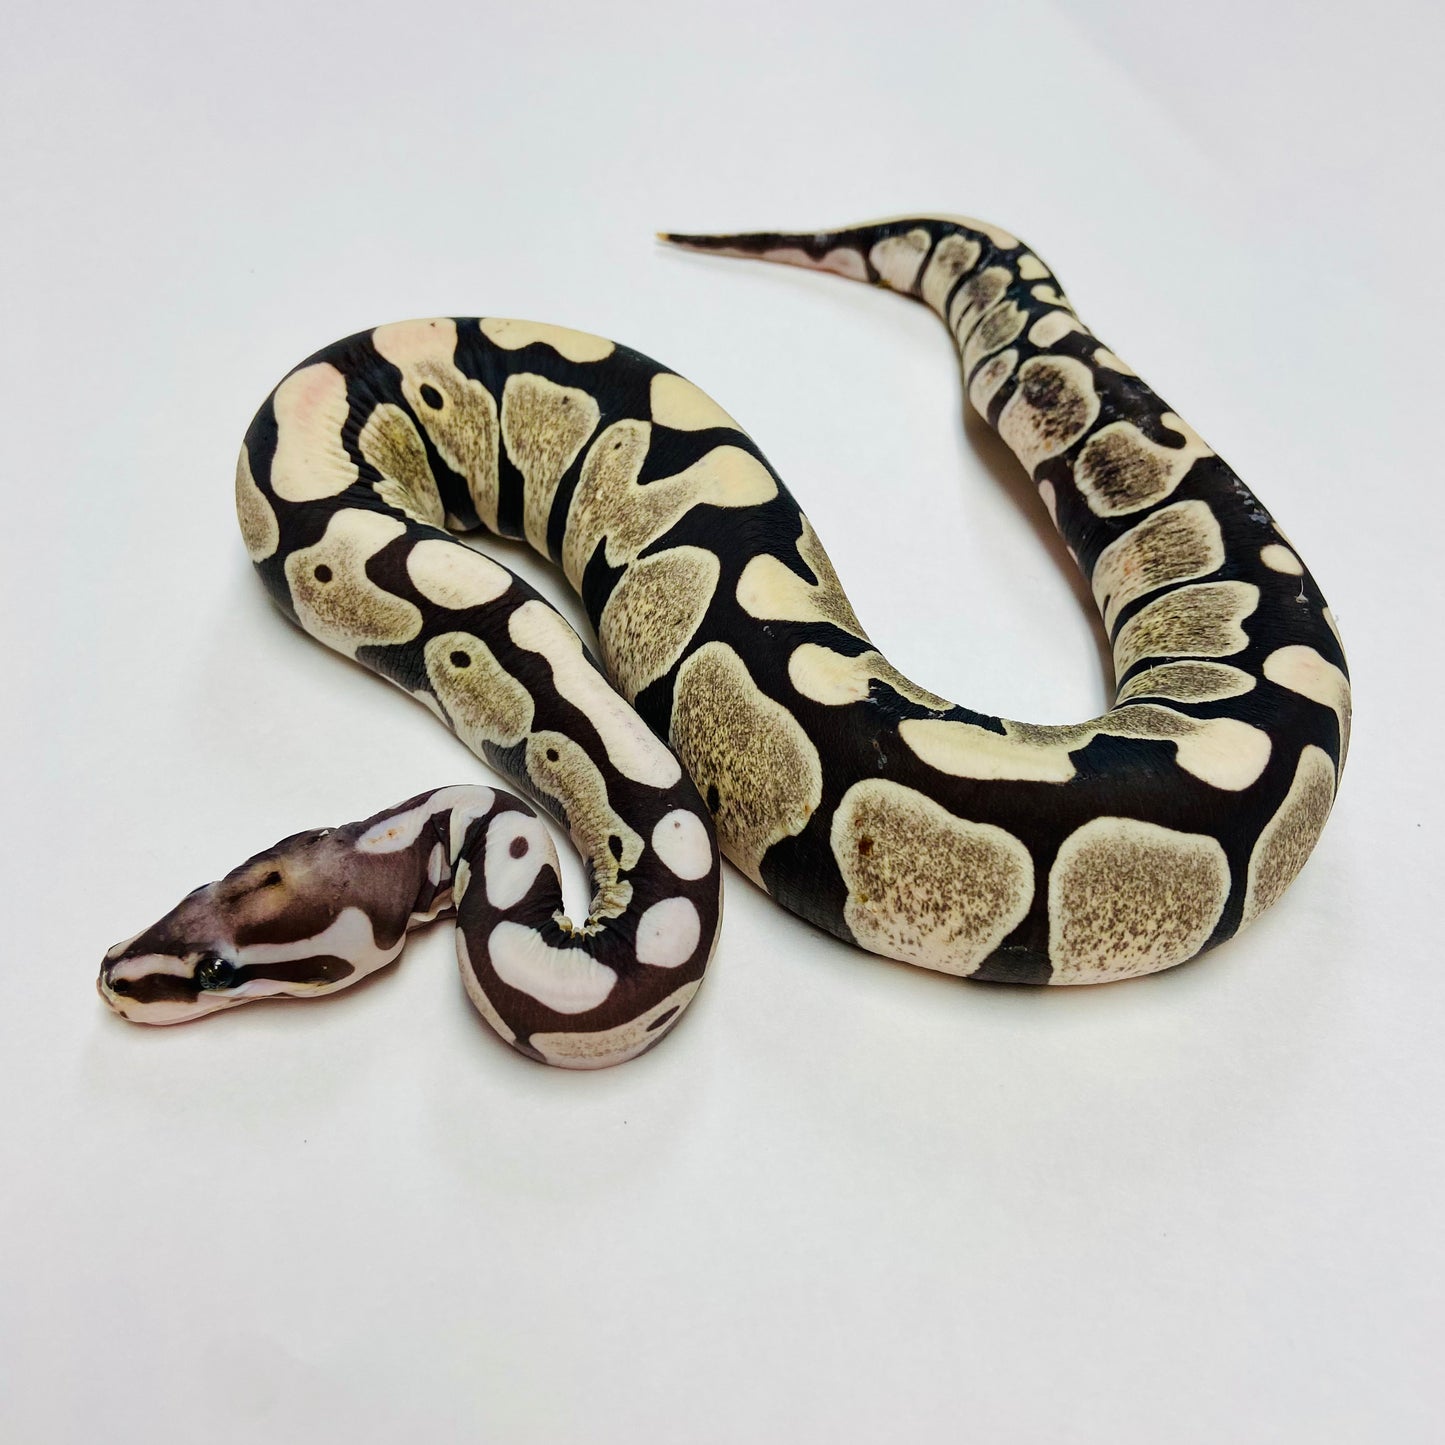 Scaleless Ball Python- Female #2023F02